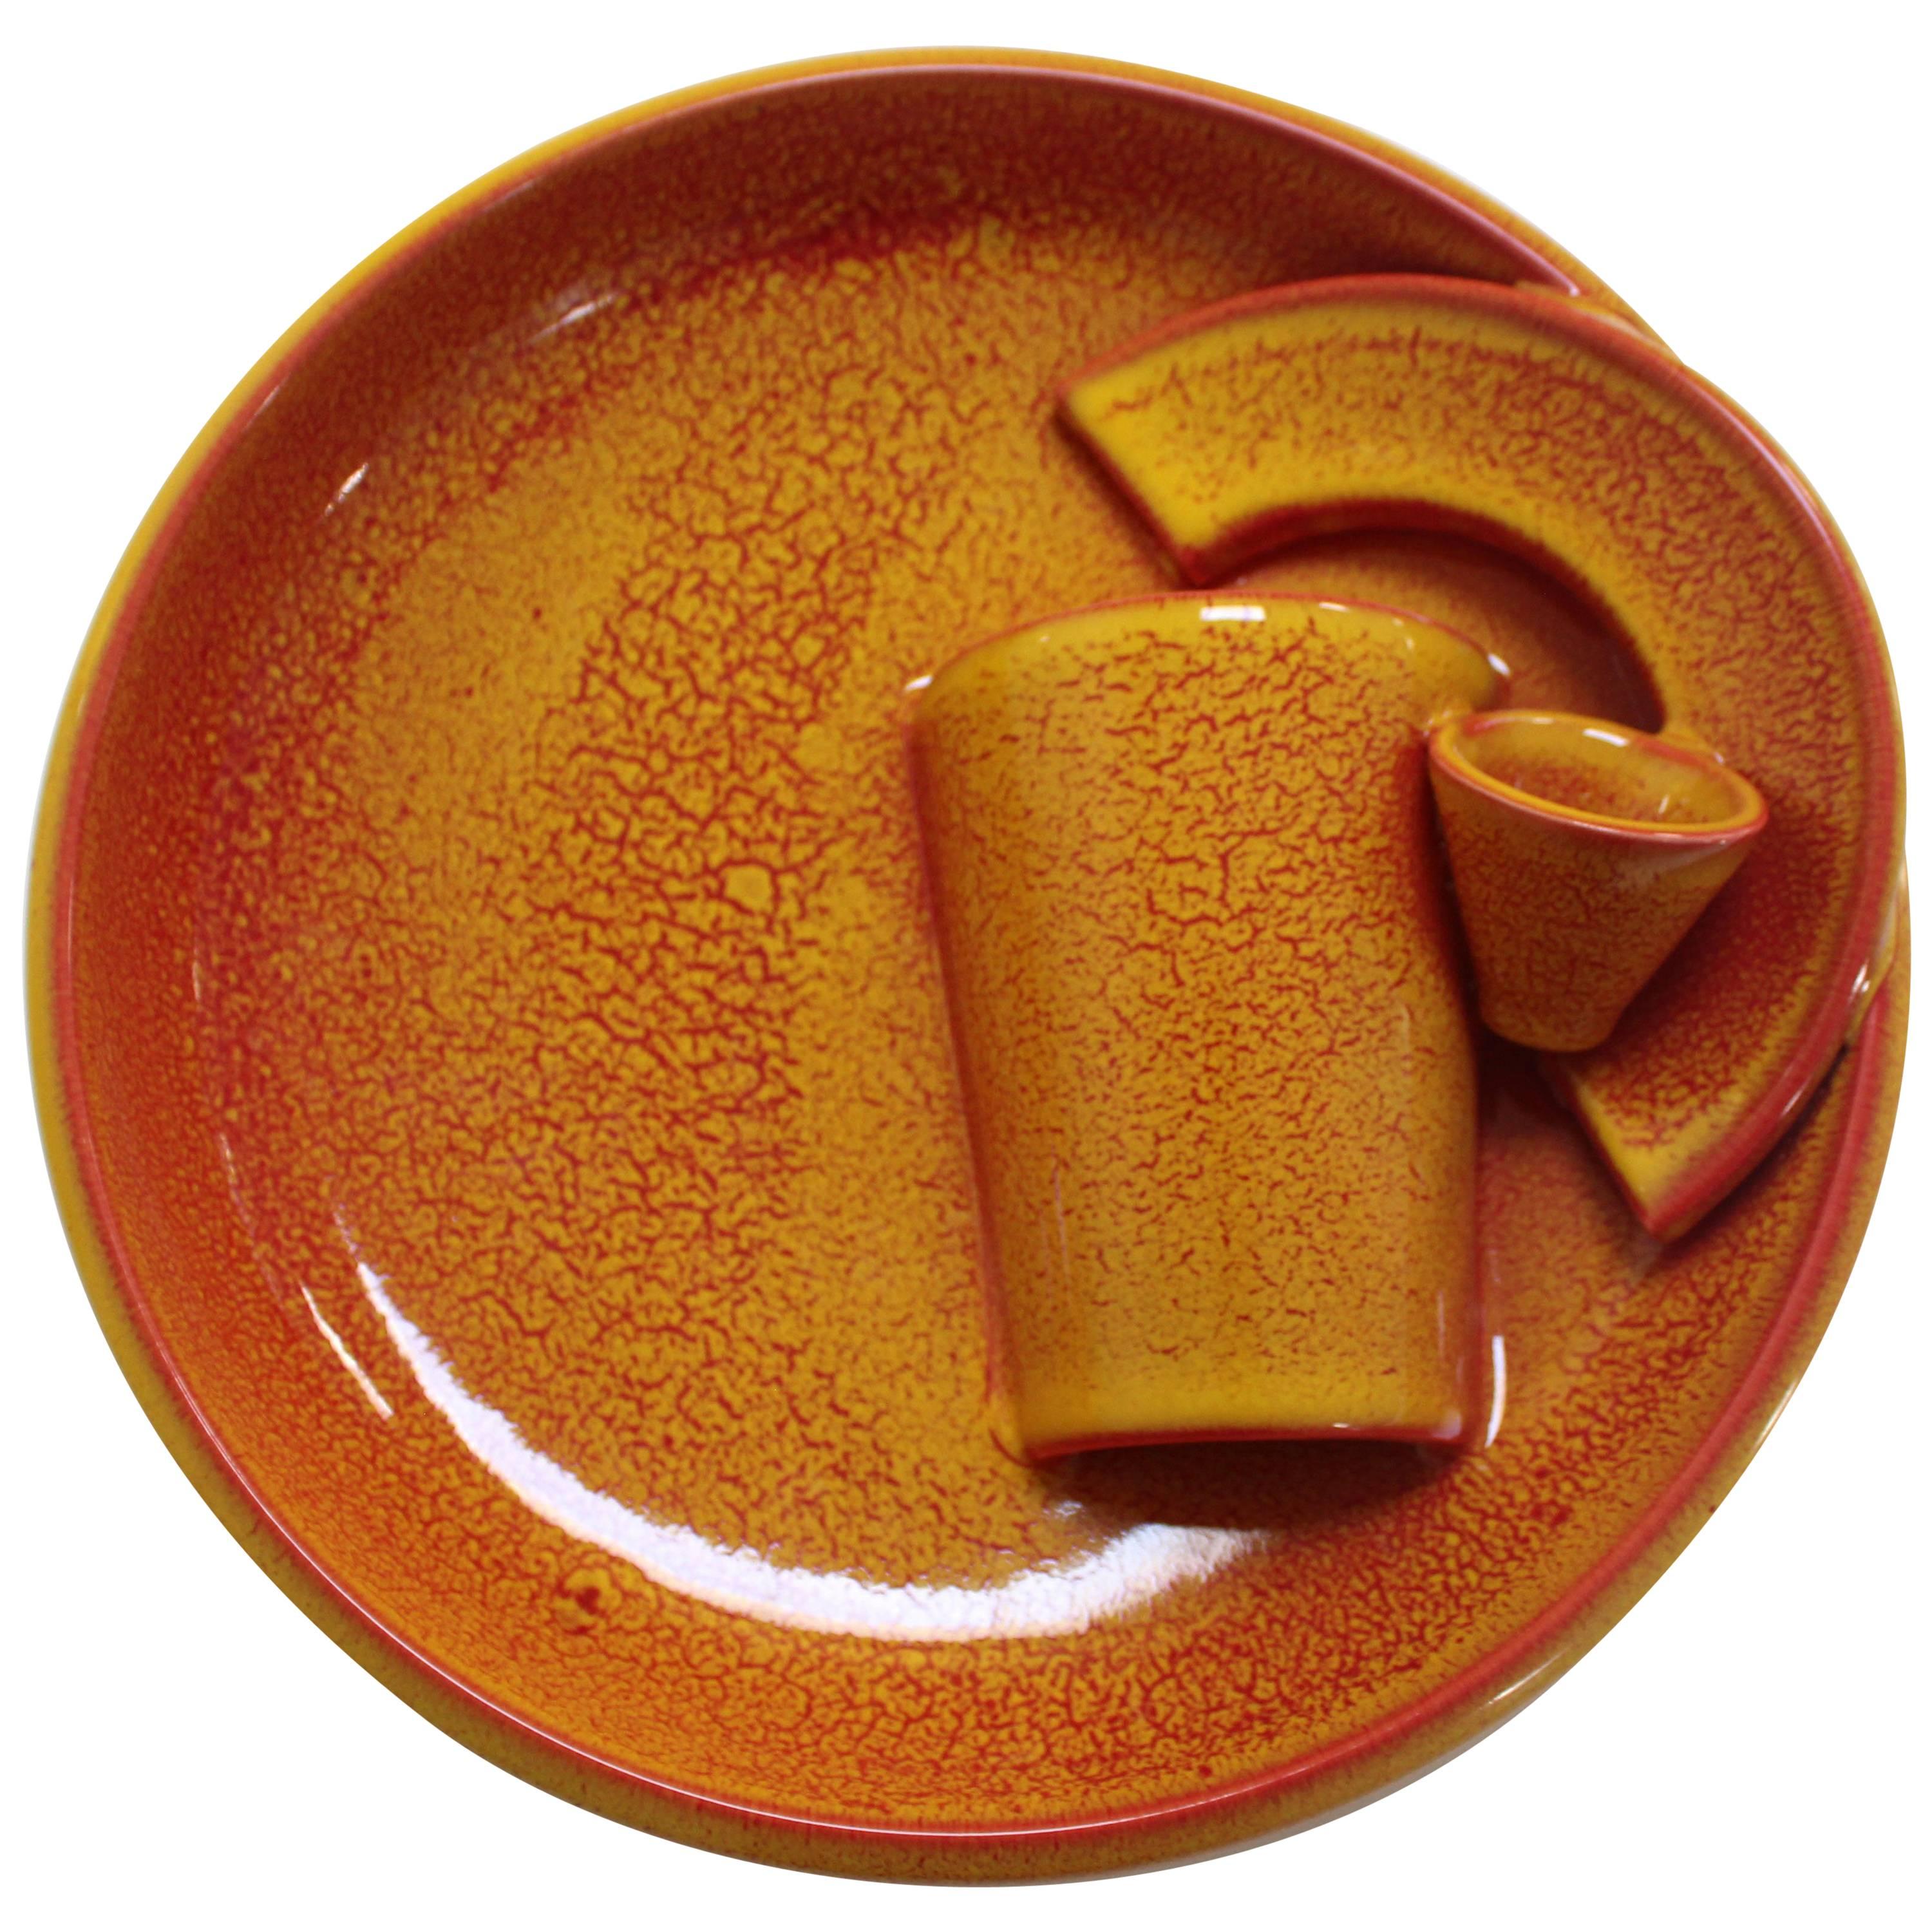 Ceramic Deconstructed Handthown Plate by Artist Michael Geertsen For Sale